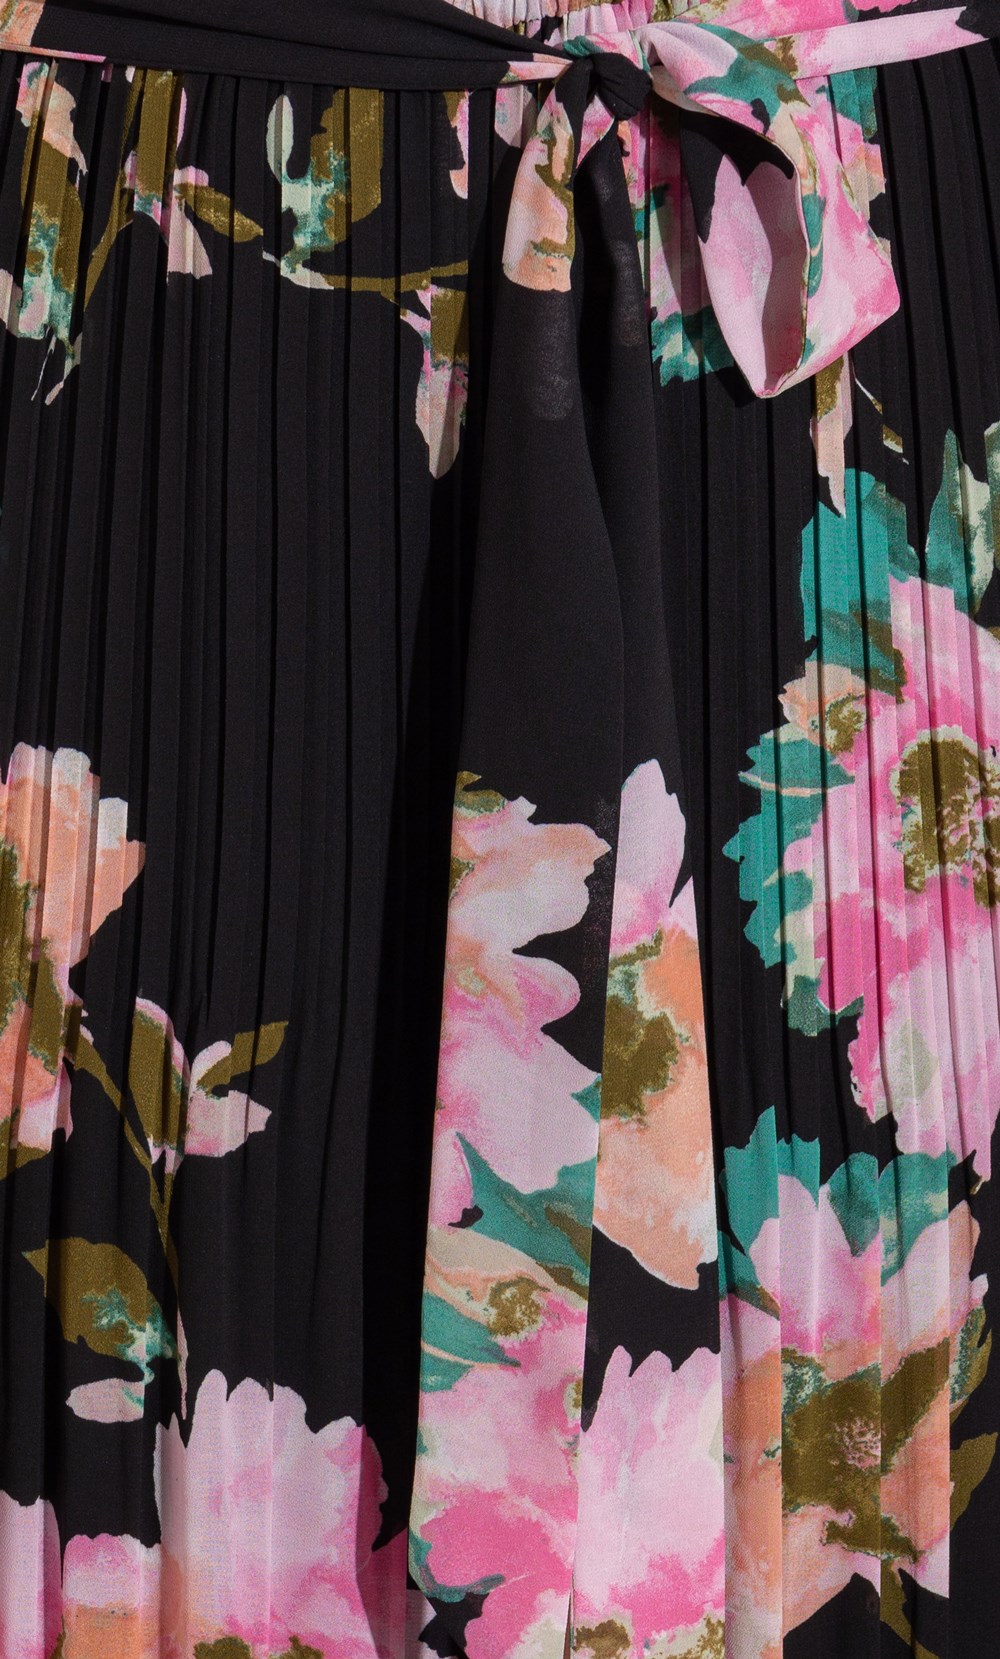 Floral Printed Sleeveless Jumpsuit